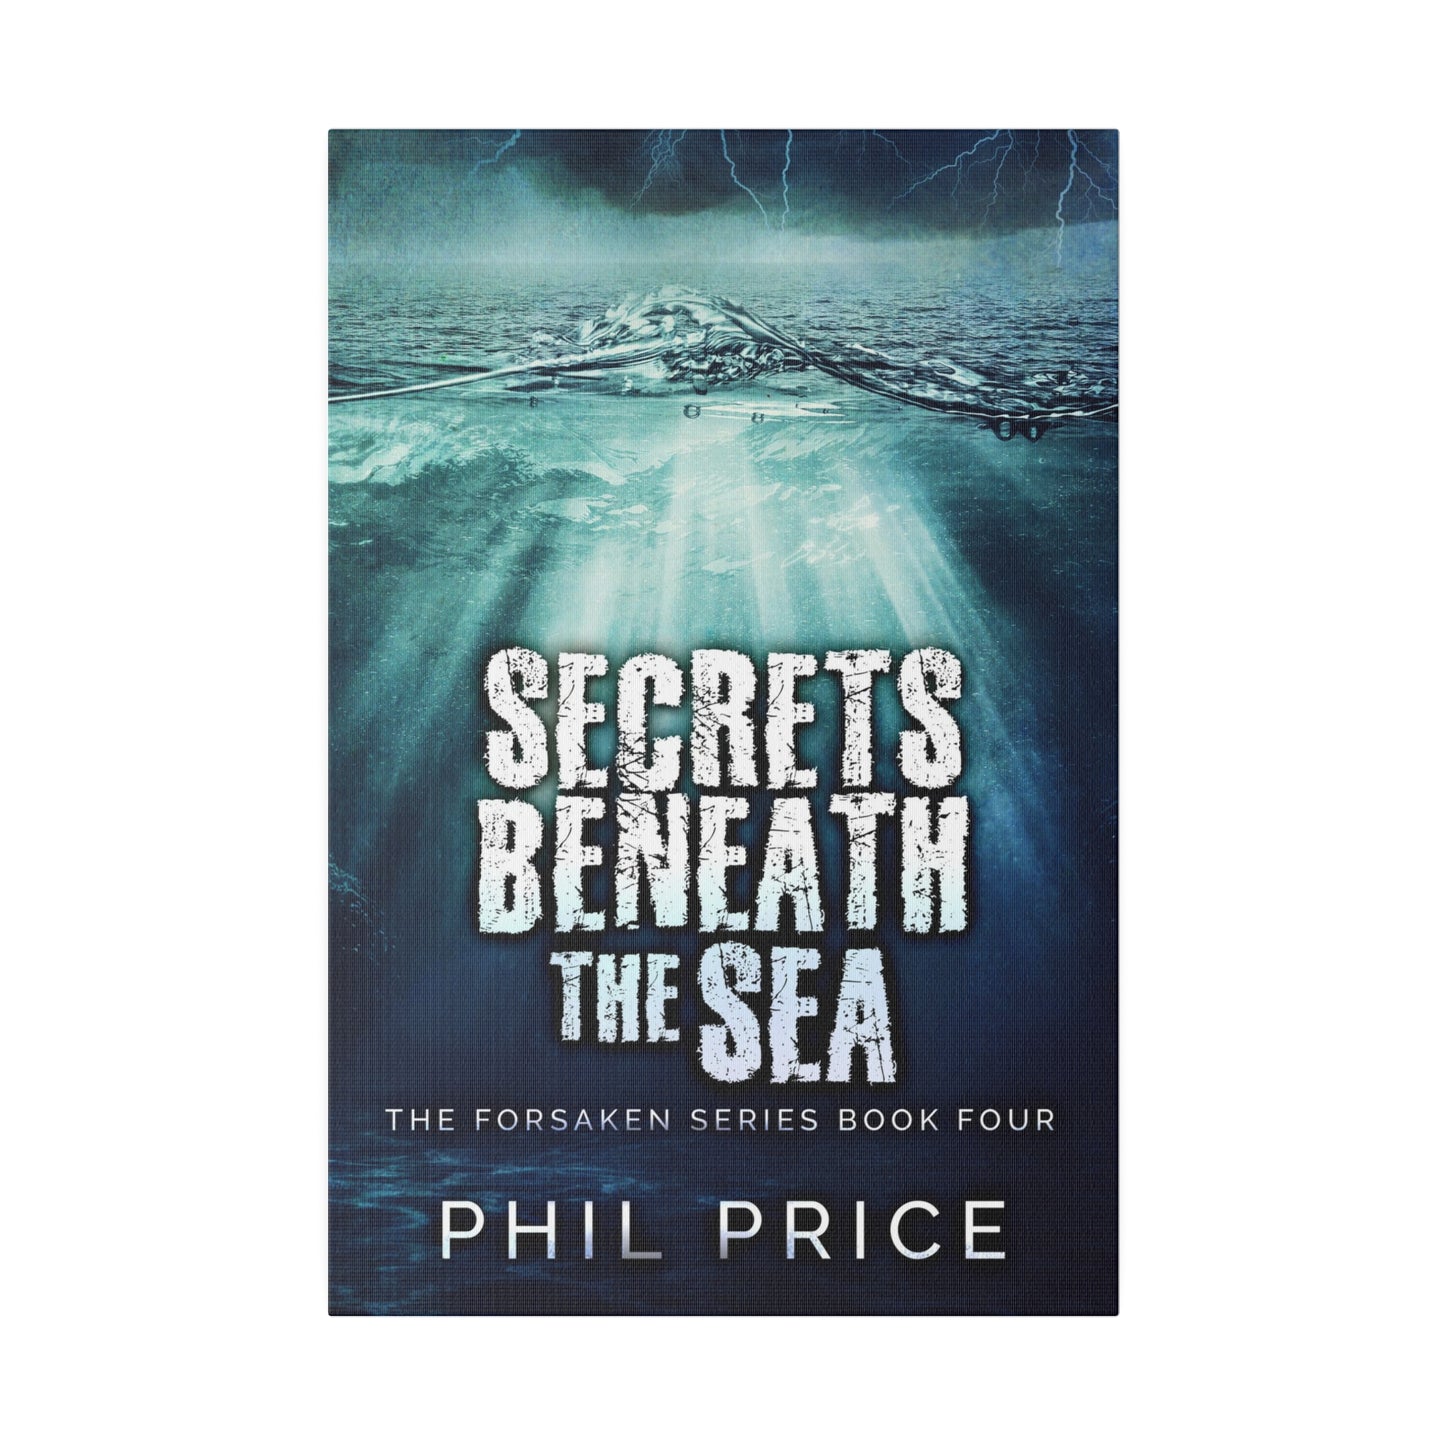 Secrets Beneath The Sea - Canvas